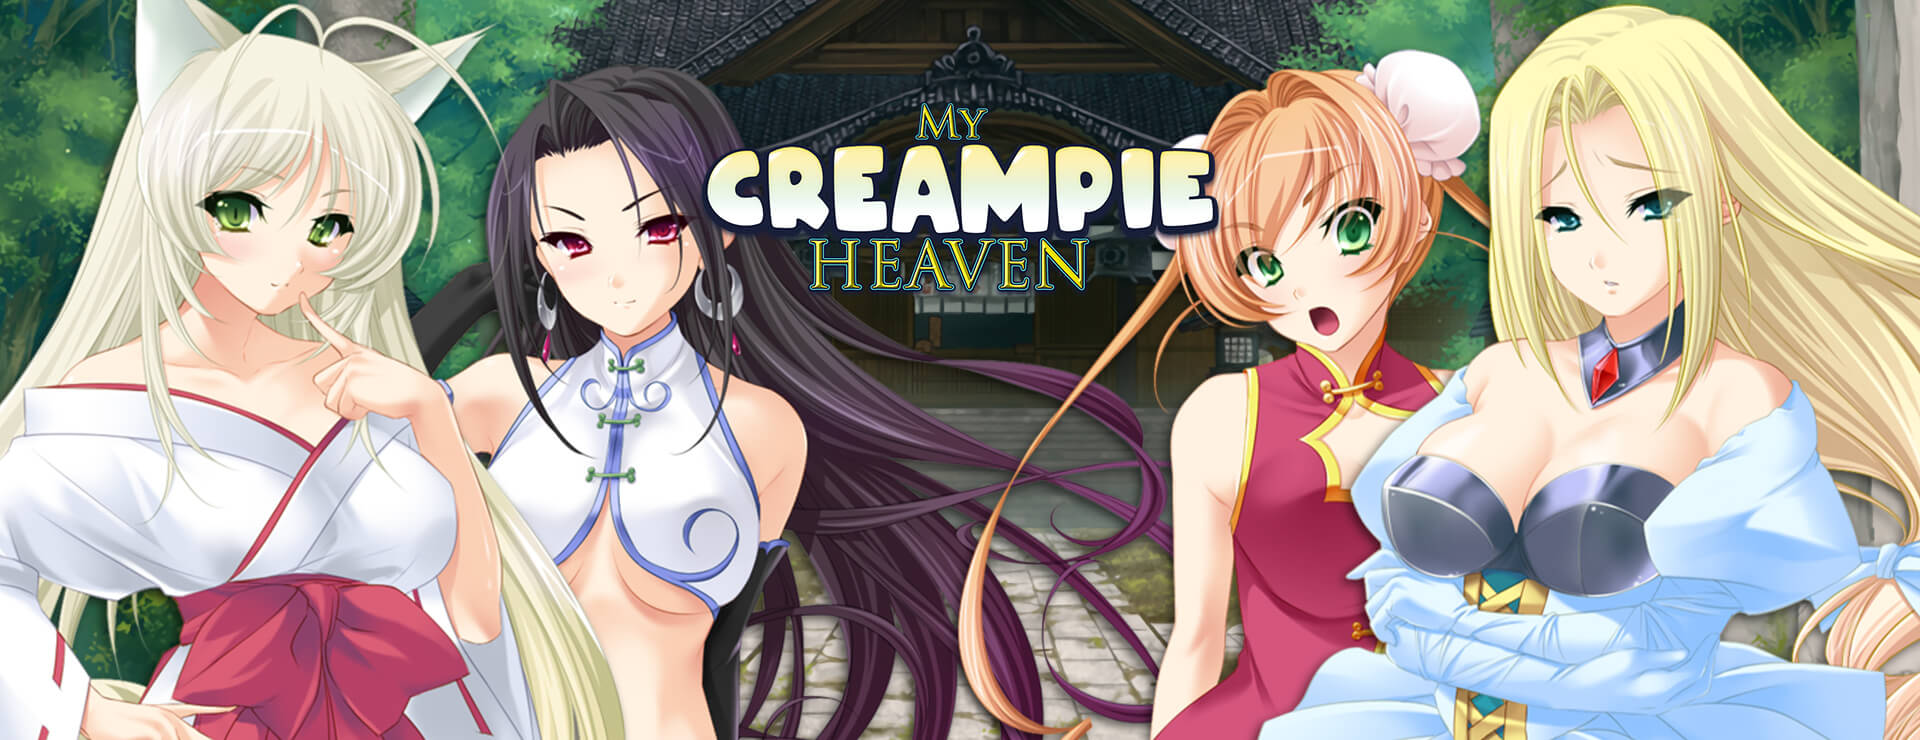 My Creampie Heaven - Visual Novel Game